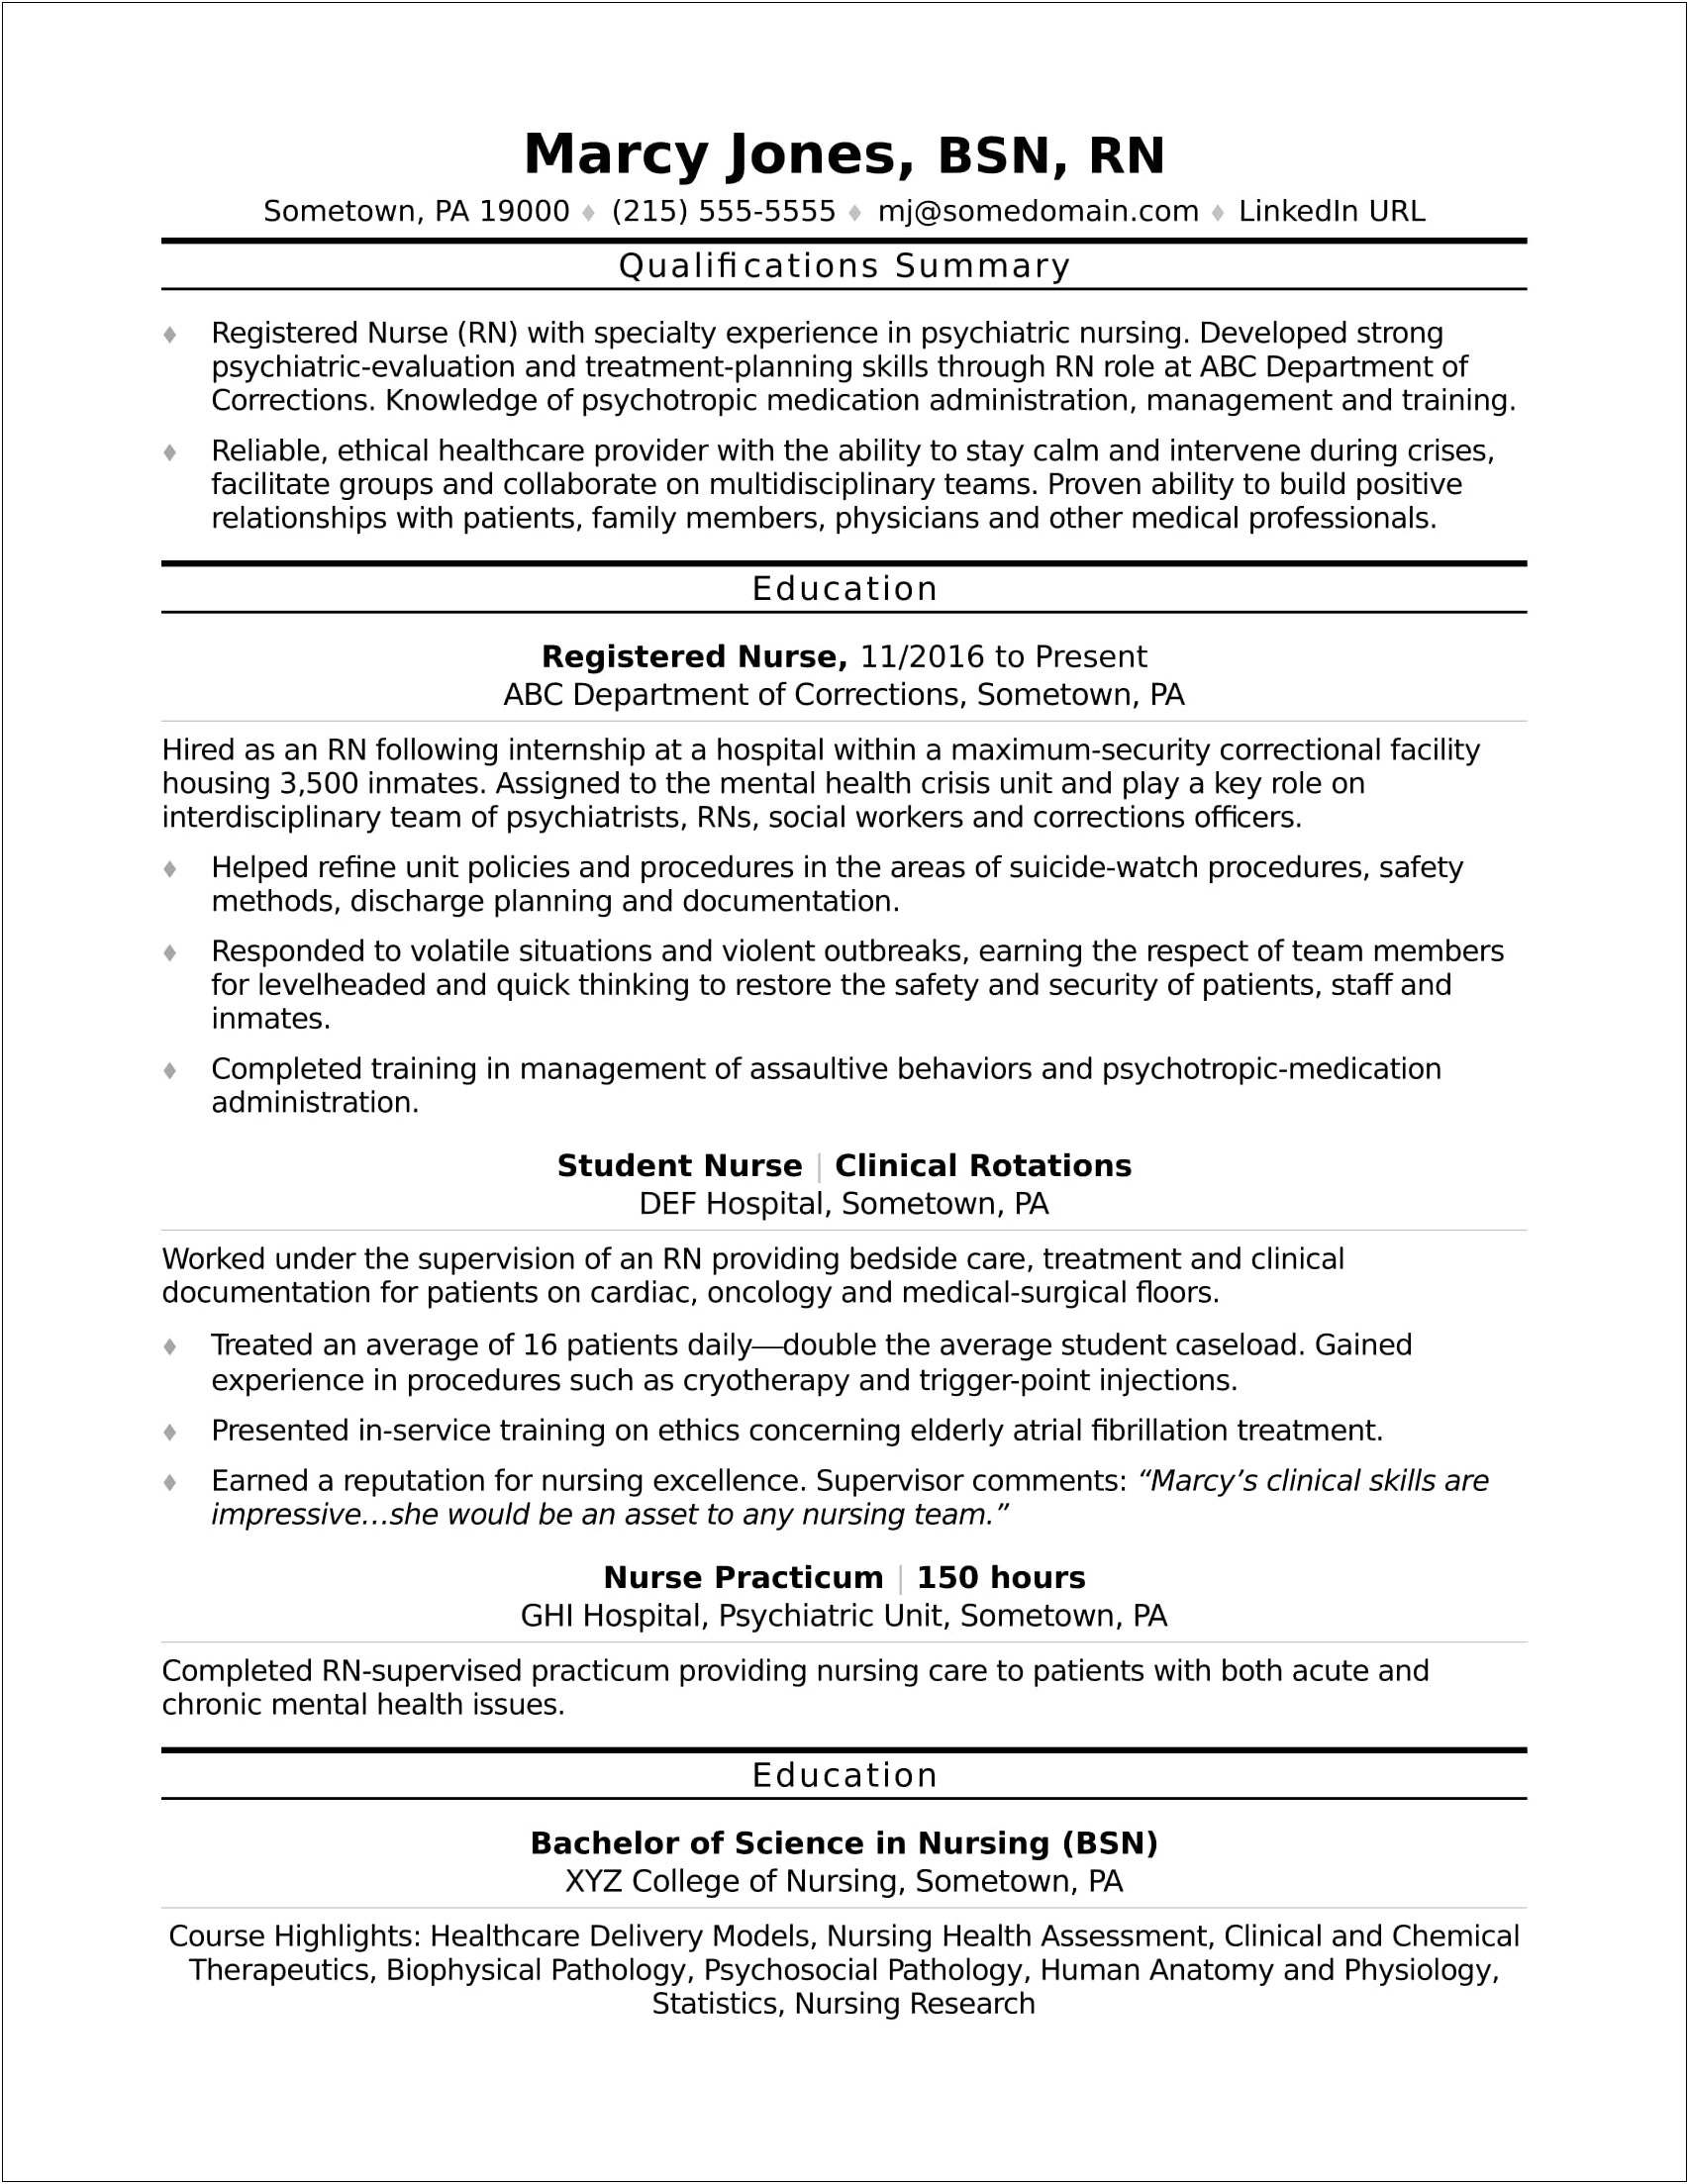 Resume For Applying To Nursing School